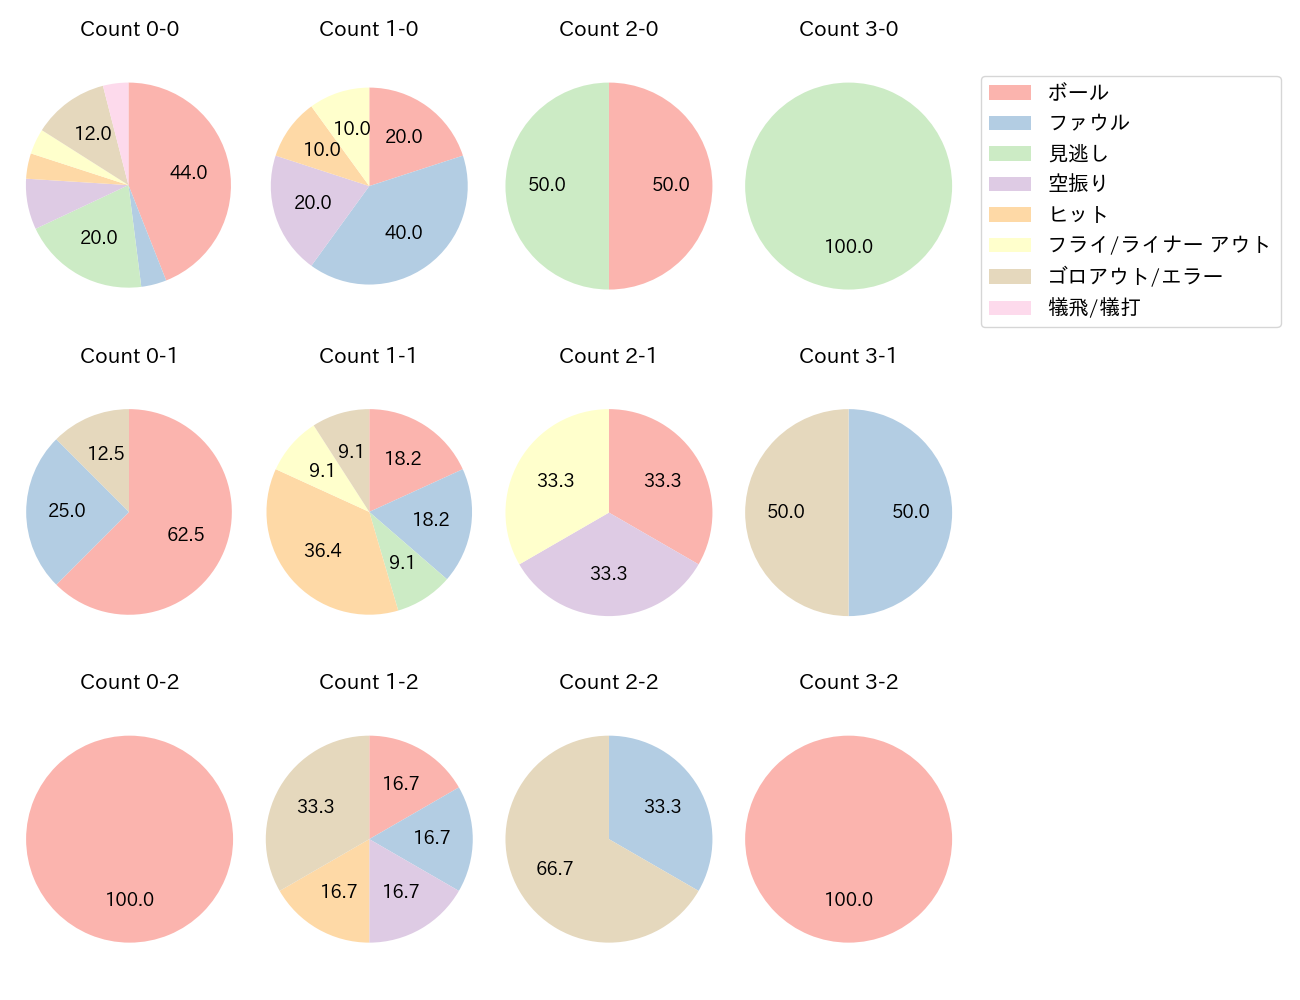 小園 海斗の球数分布(2021年4月)